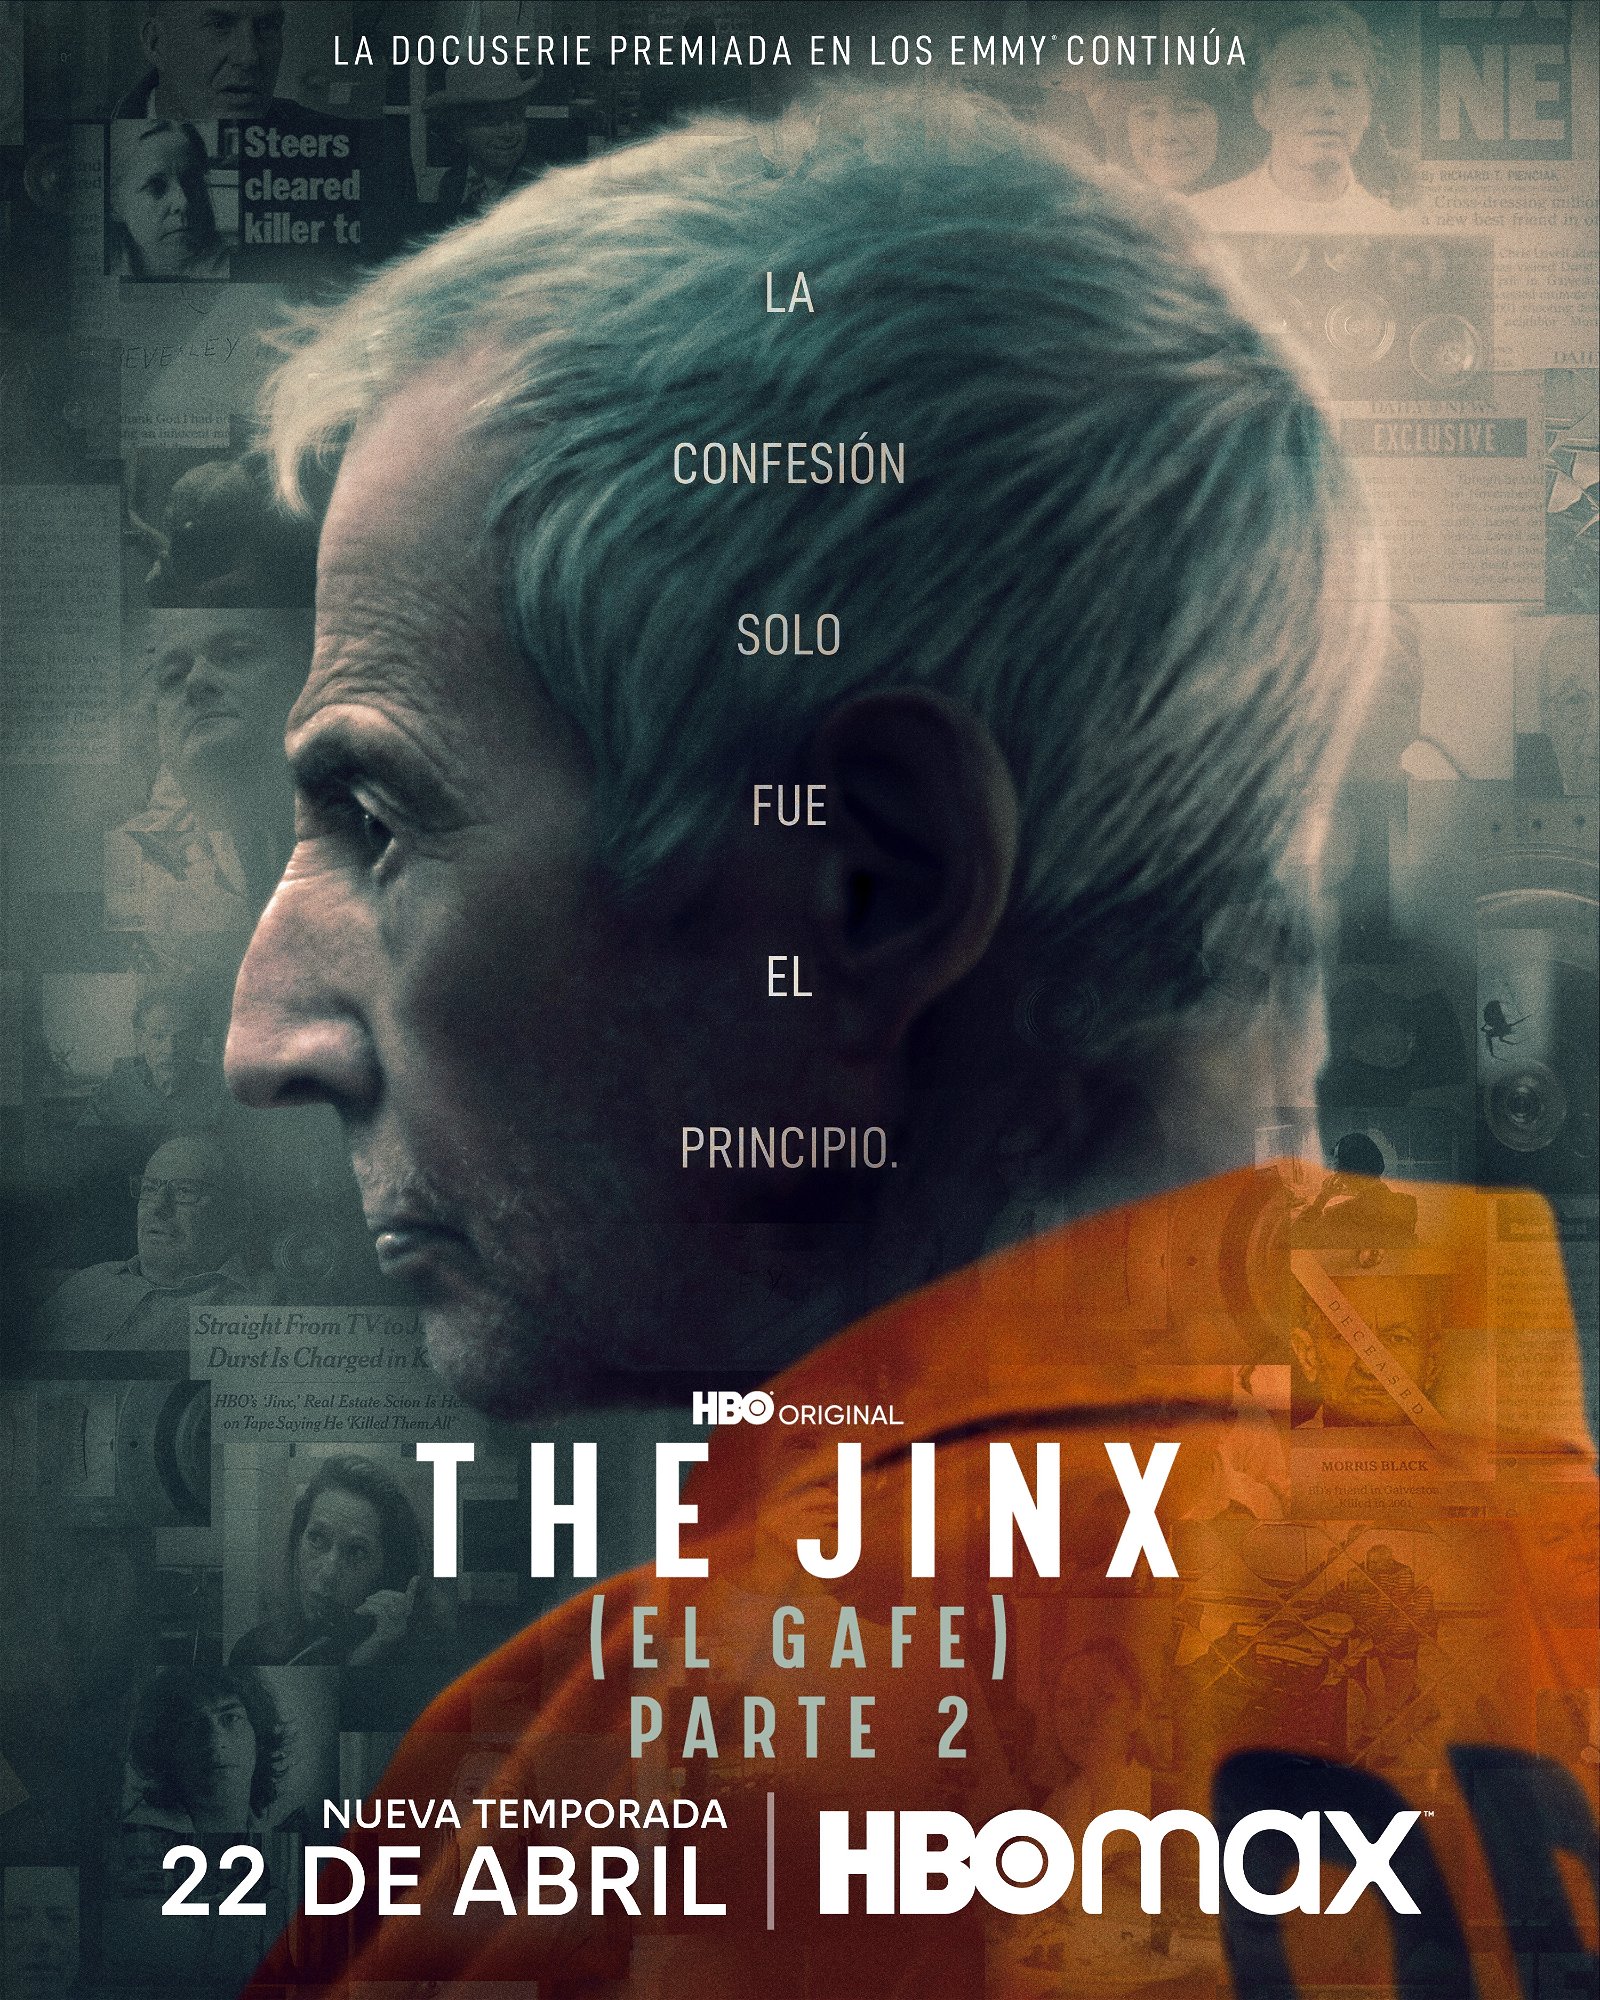 Póster oficial The Jinx 2 (El Gafe) - Parte 2